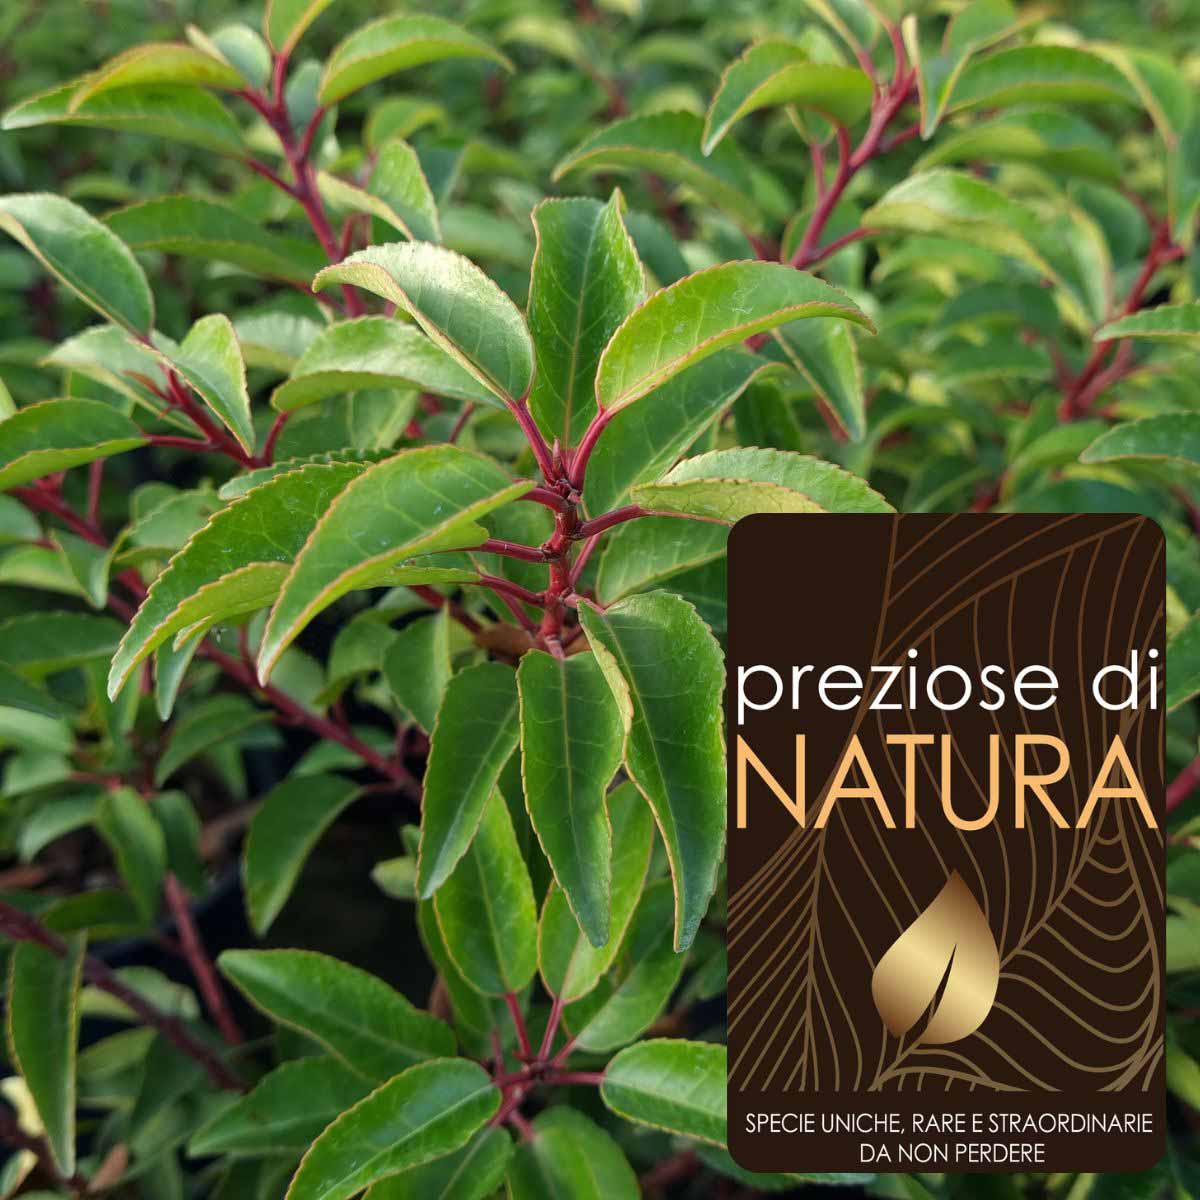 Preziose di Natura – Prunus lusitanica “Brenelia” PBR